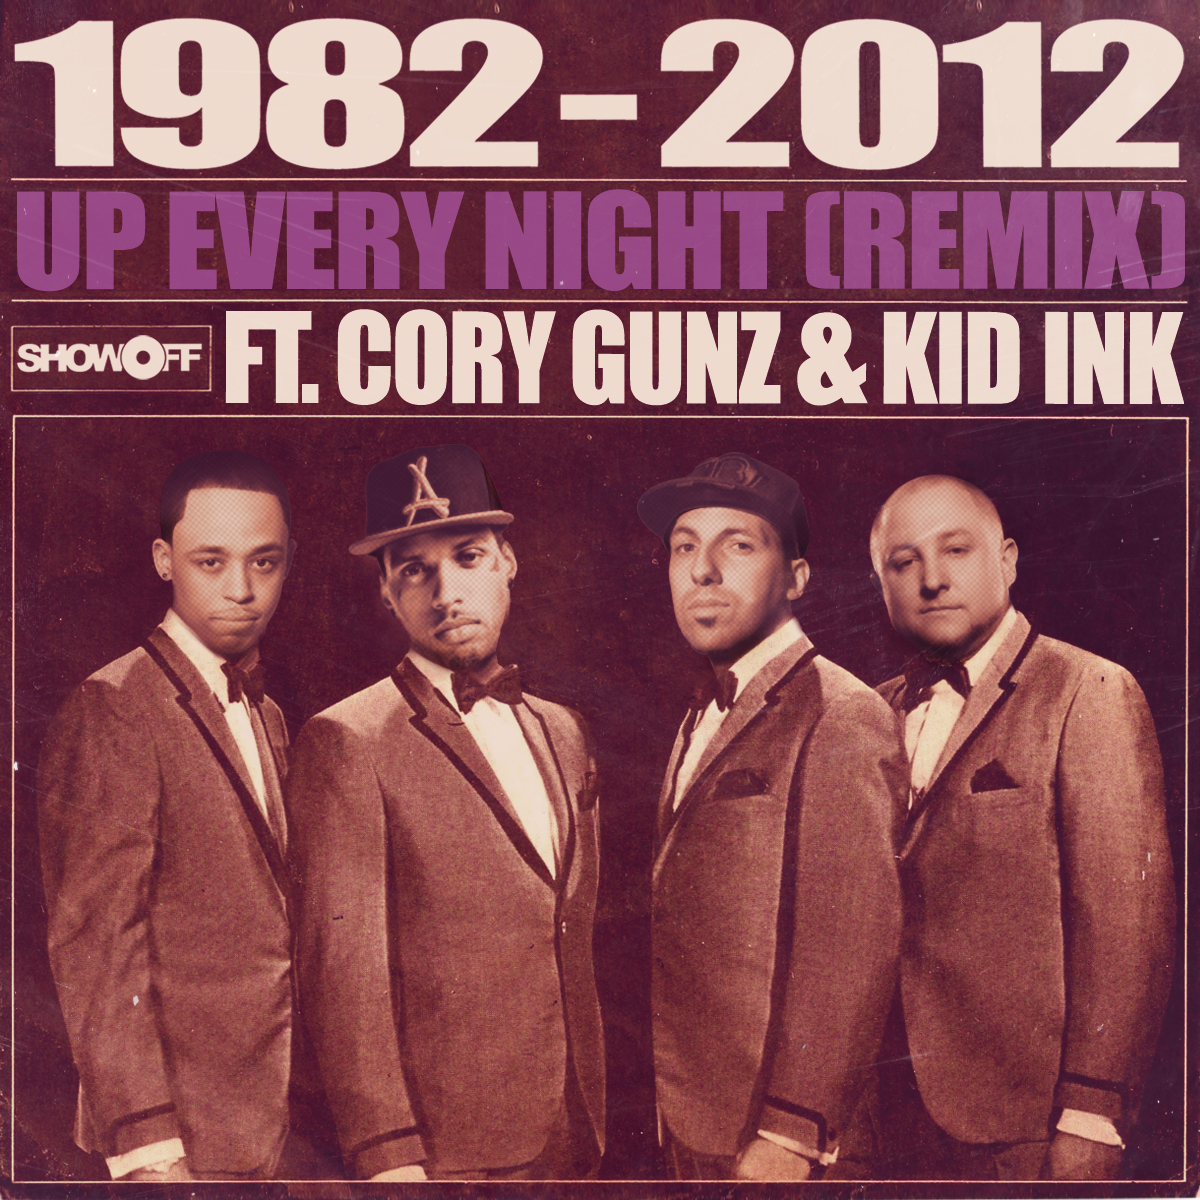 1982 ft. Cory Gunz & Kid Ink – Up Every Night Remix (Audio)